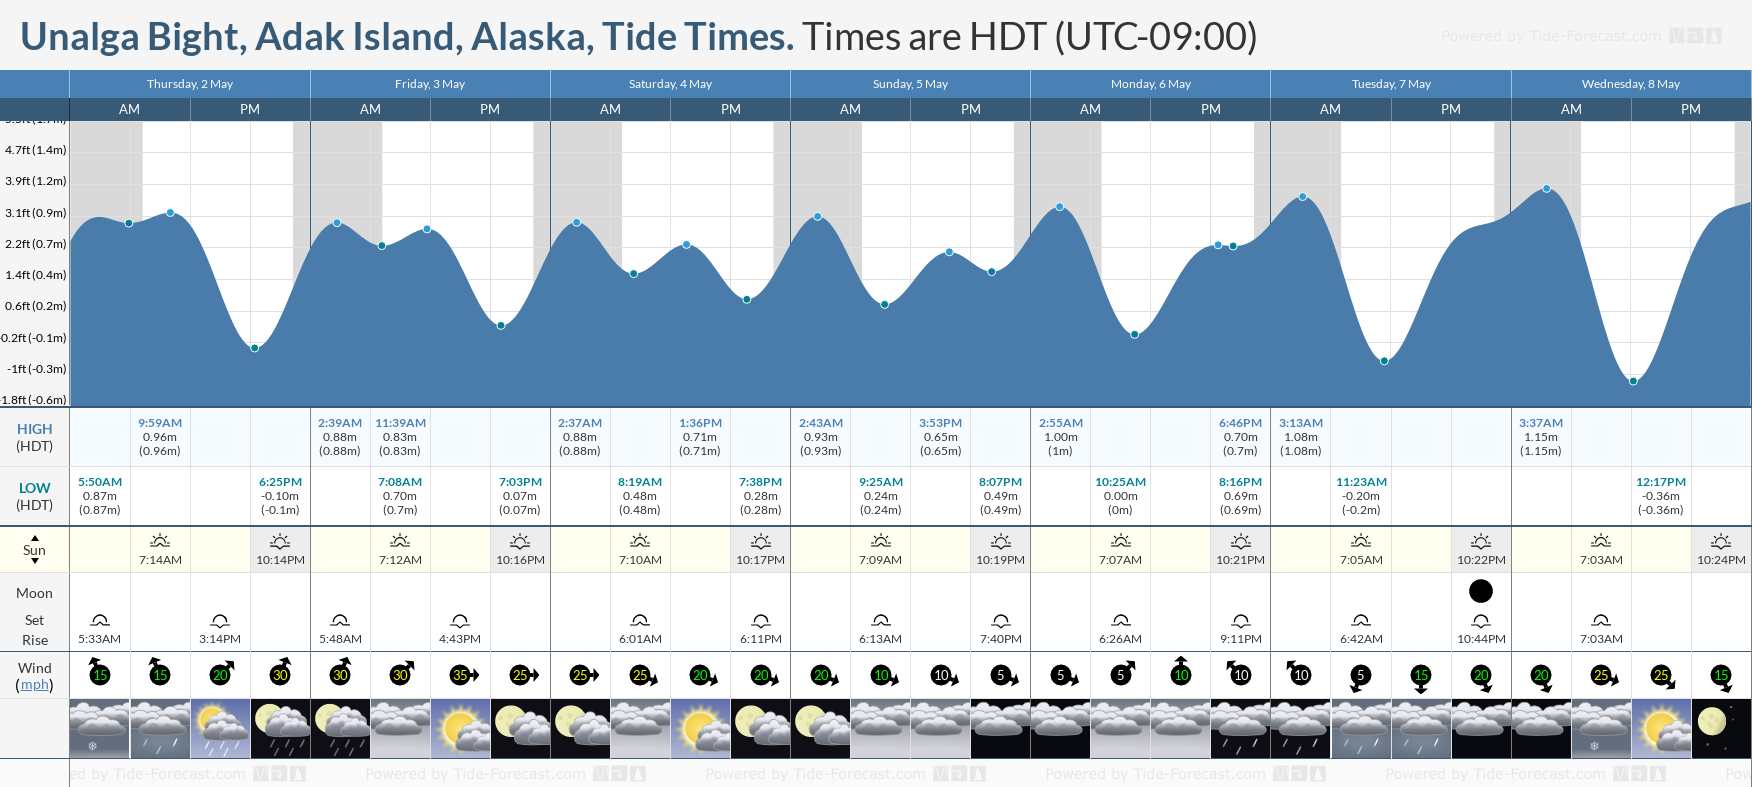 Unalga Bight, Adak Island, Alaska Tide Chart including high and low tide tide times for the next 7 days